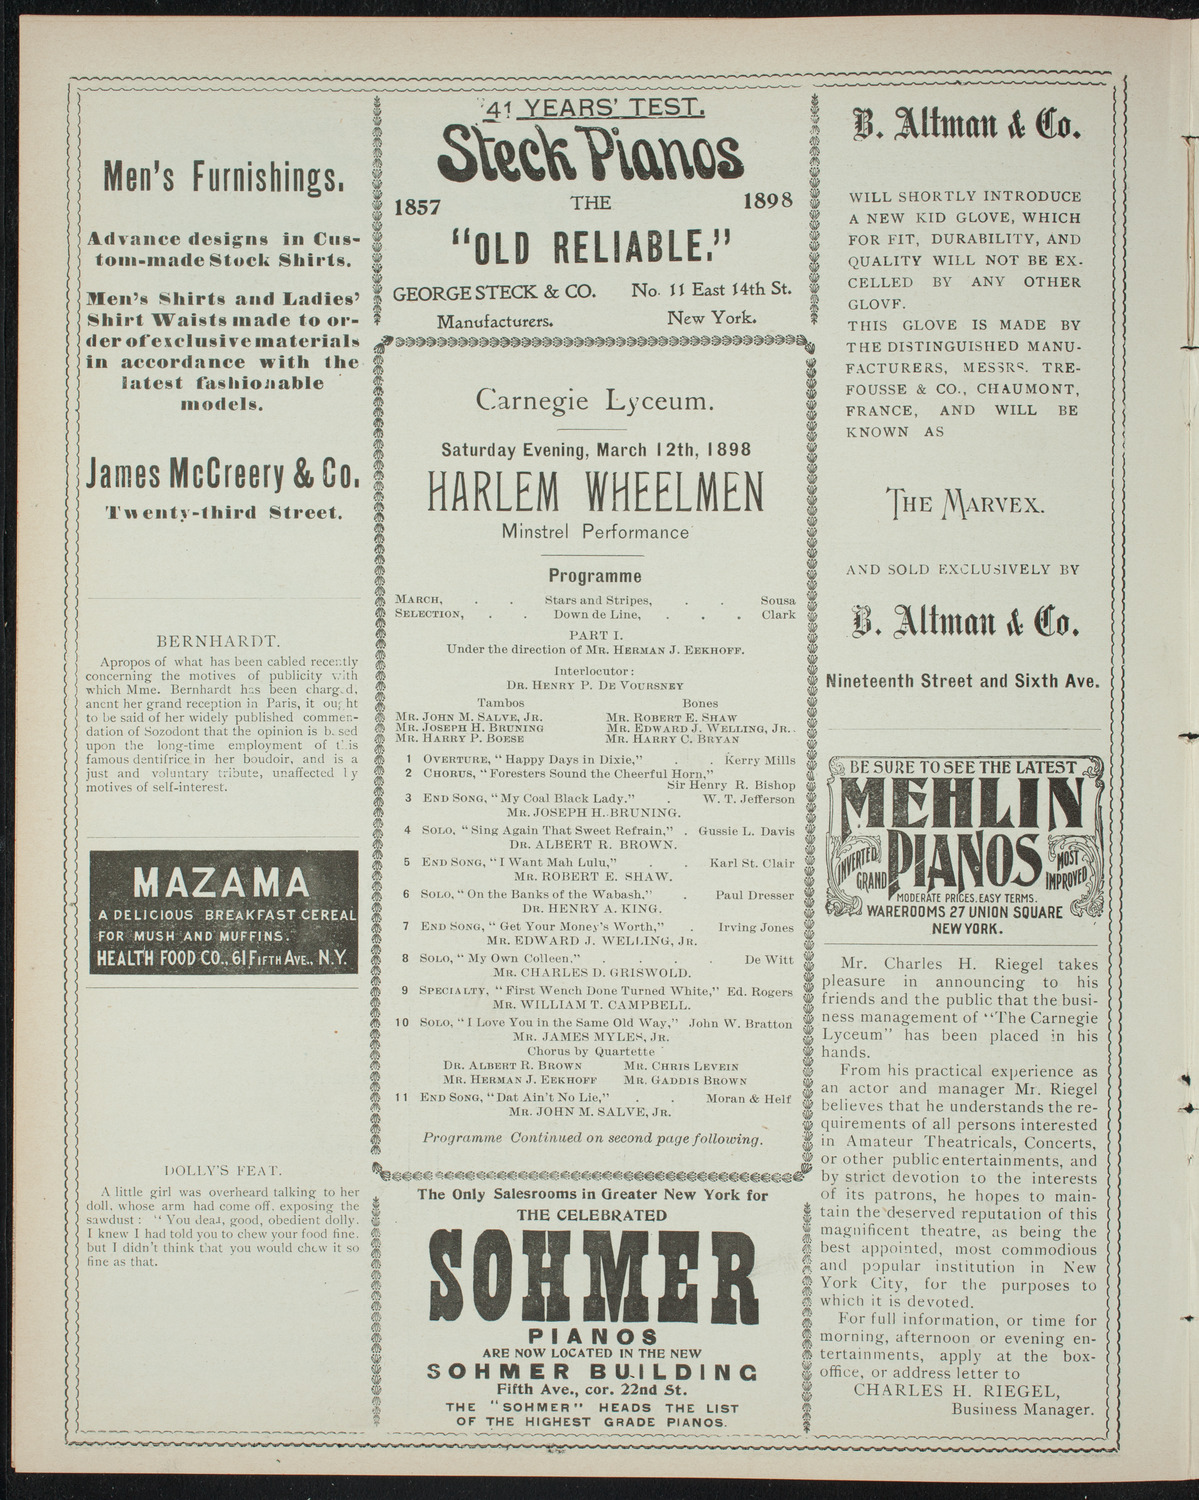 Harlem Wheelmen Minstrel Performance, March 12, 1898, program page 4